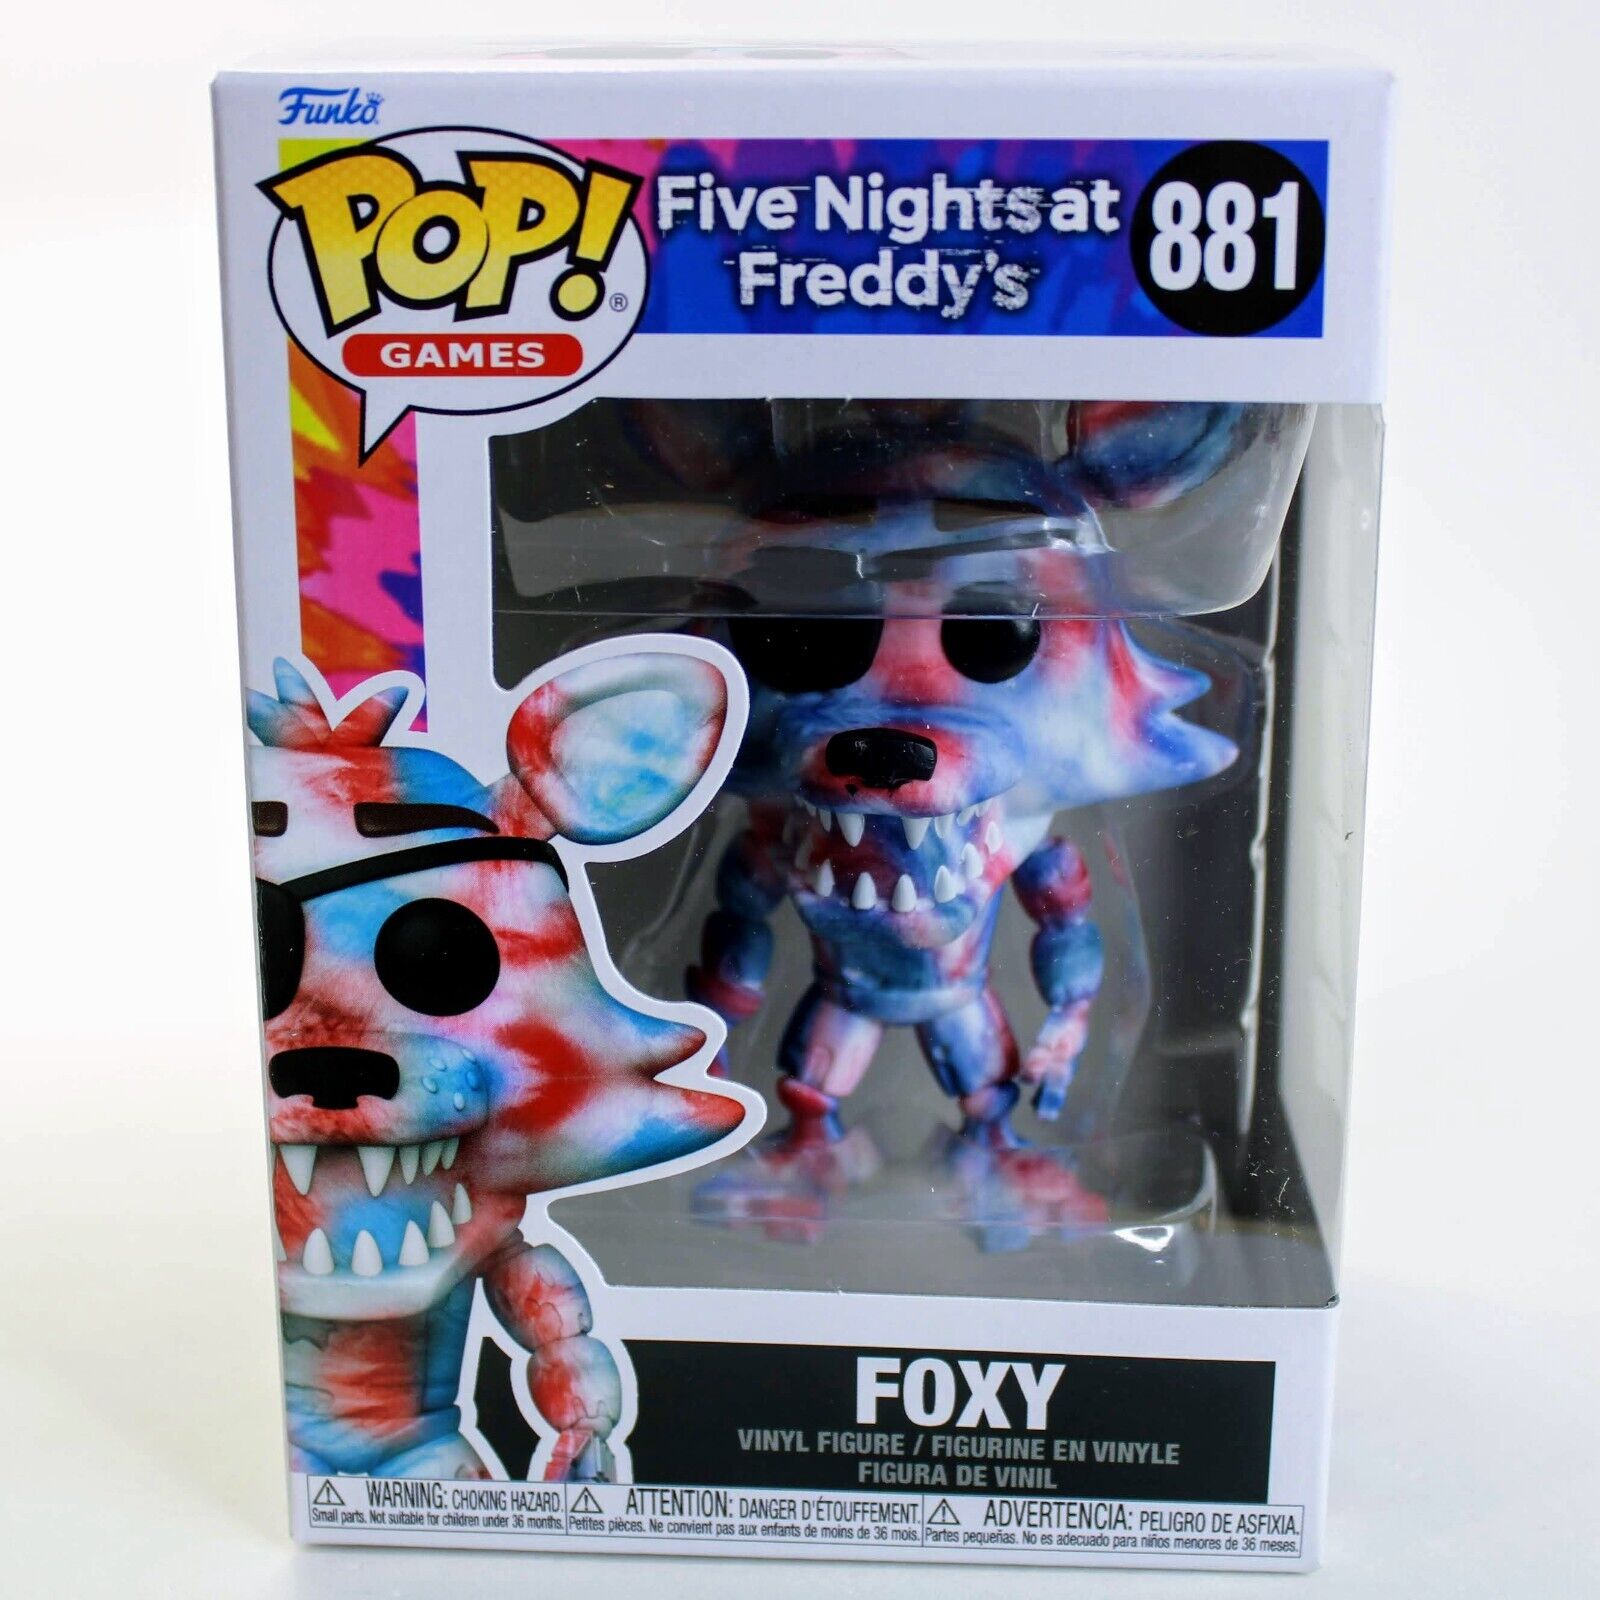 Funko POP! Games: Five Nights at Freddy's Tie-Dye Bonnie 4-in